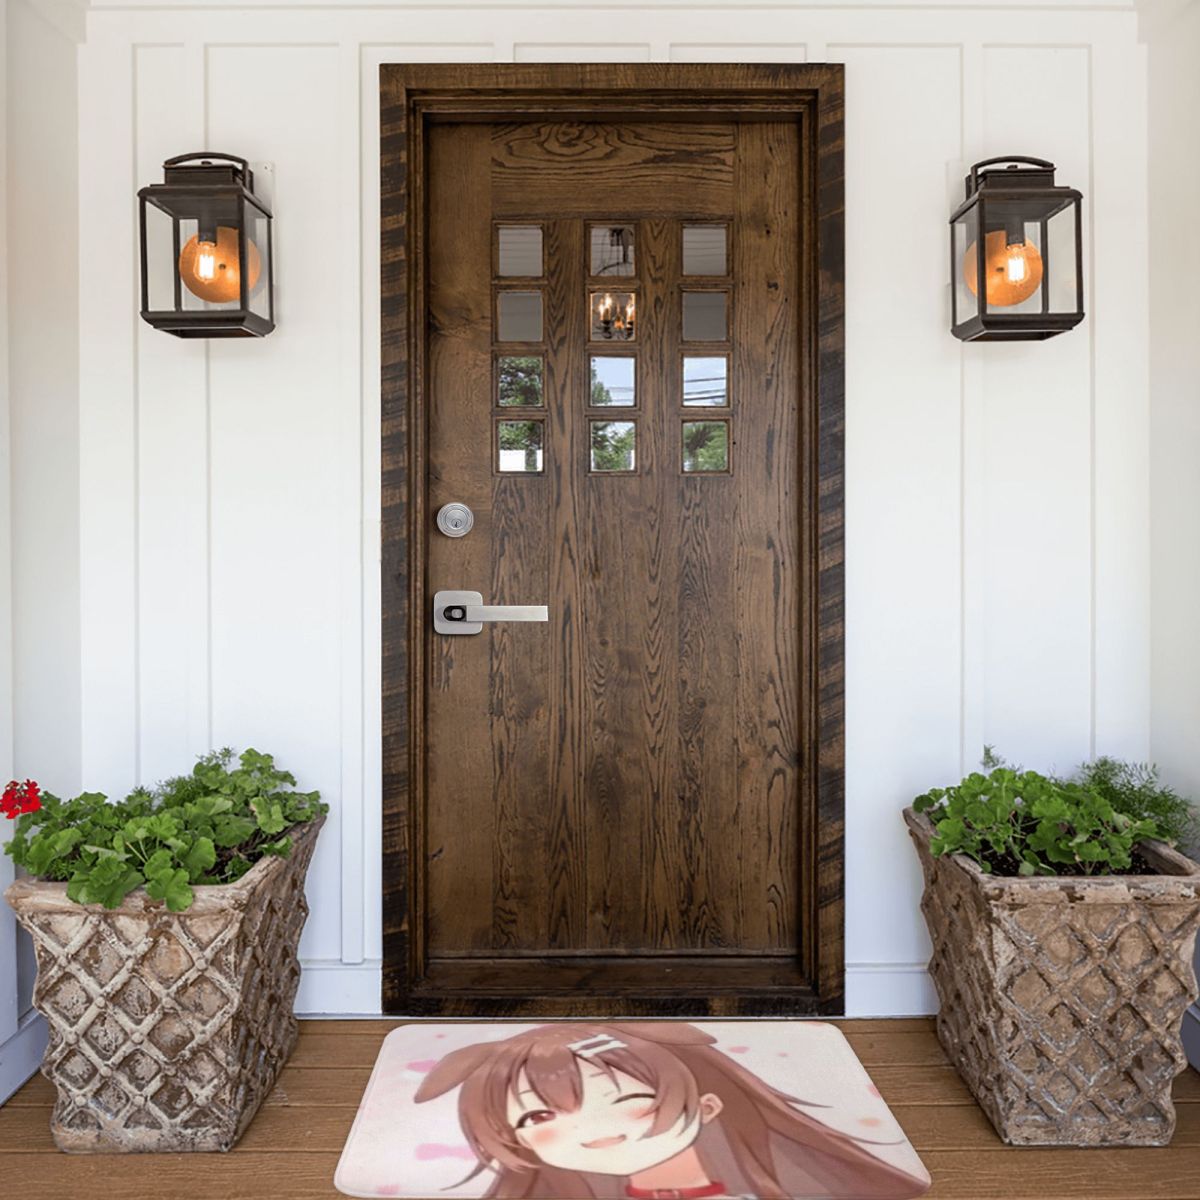 Hololive Kawaii Virtual Idol Non-slip Doormat Inugami Korone Wink Shy Carpet Living Room Kitchen Mat Welcome Indoor Pattern, everythinganimee